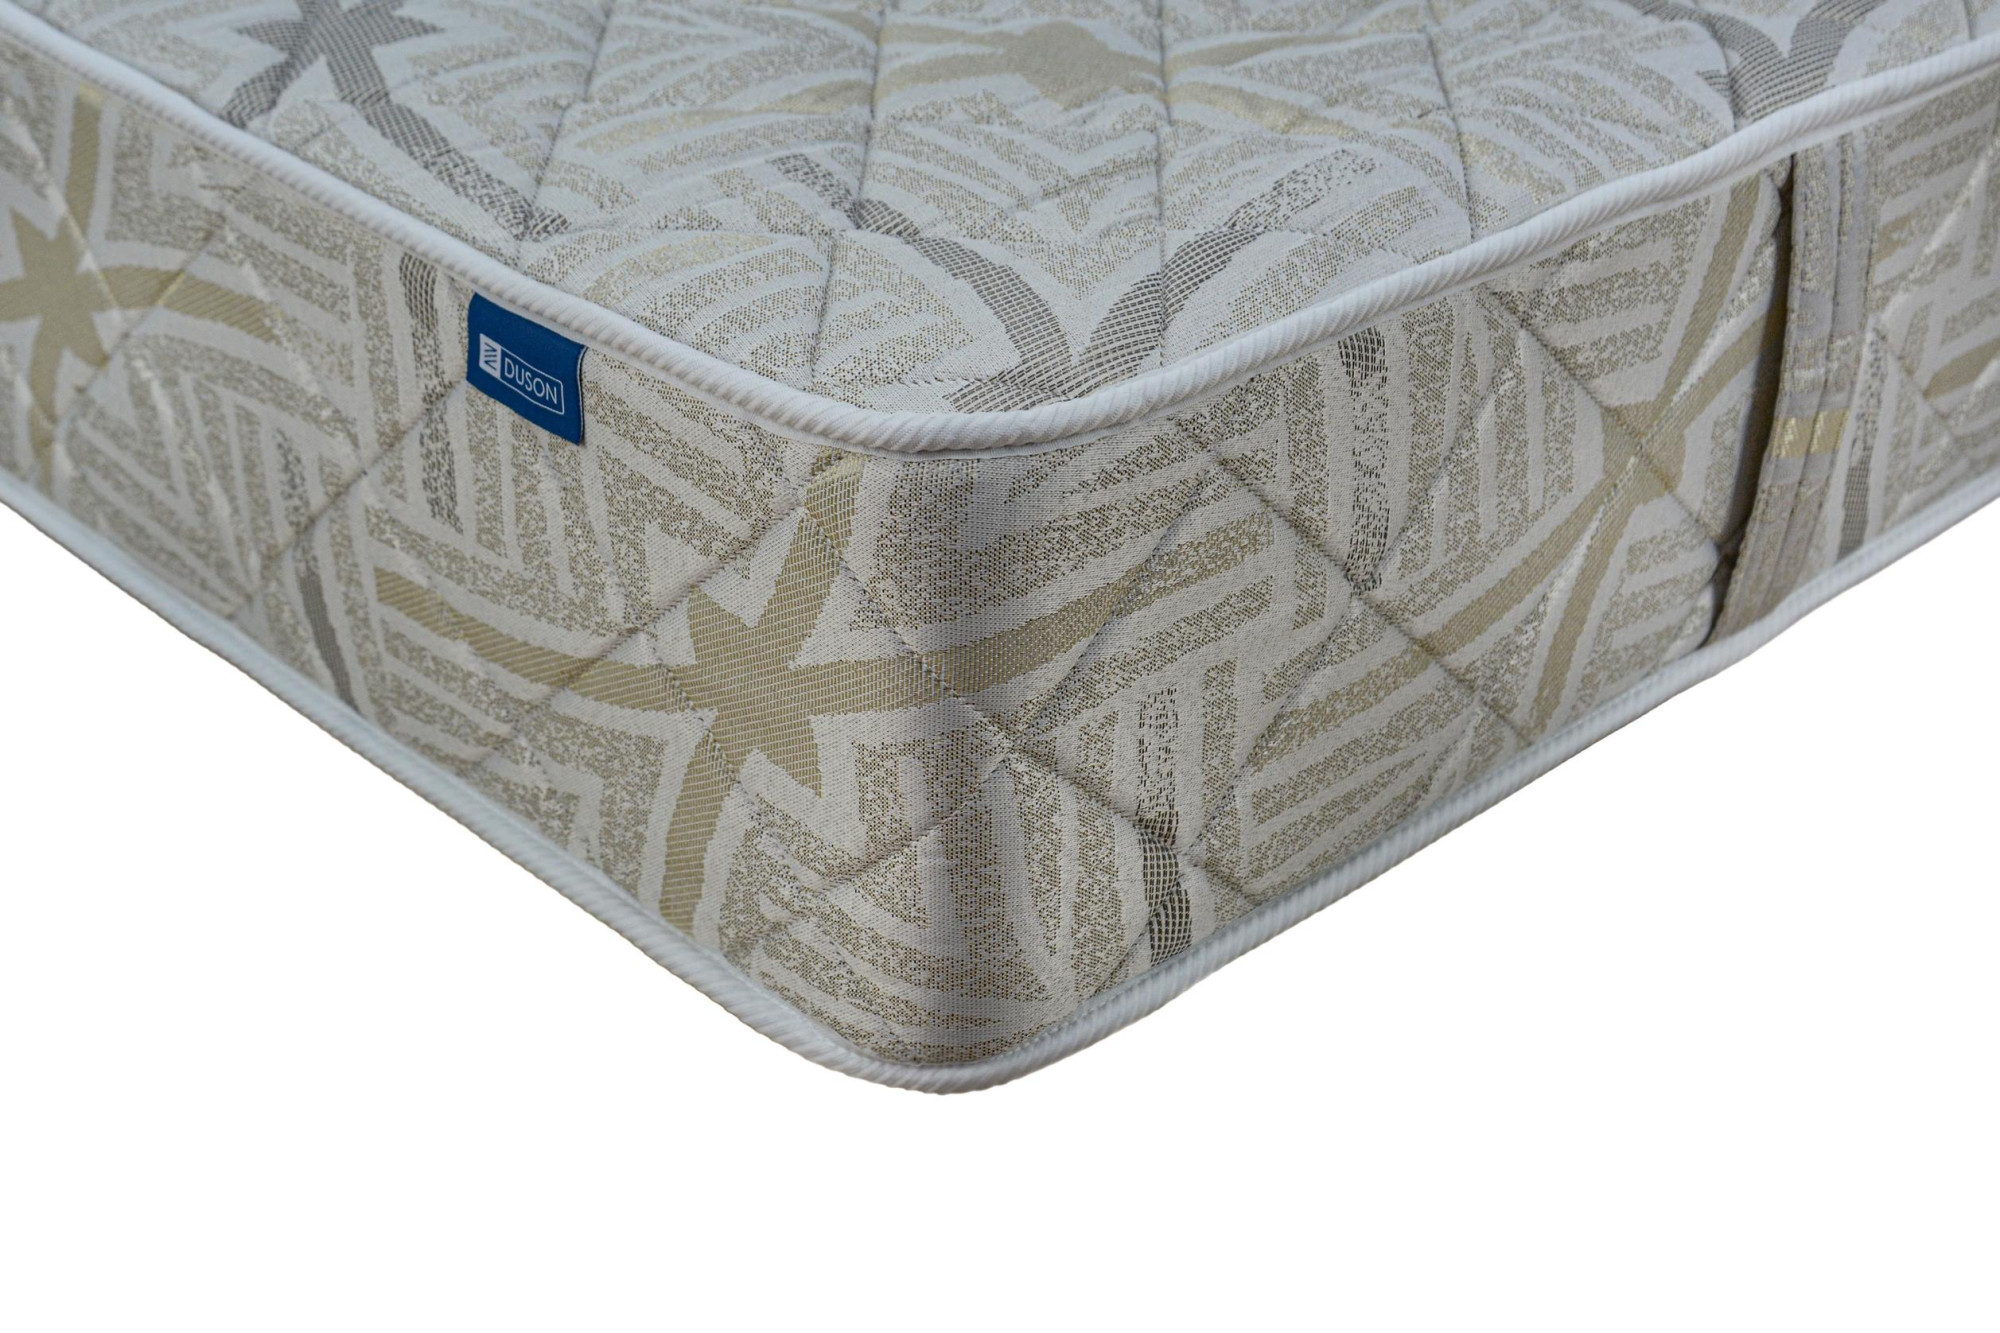 Orthopedic mattress Continental One-sided 100x190 soft, 25cm